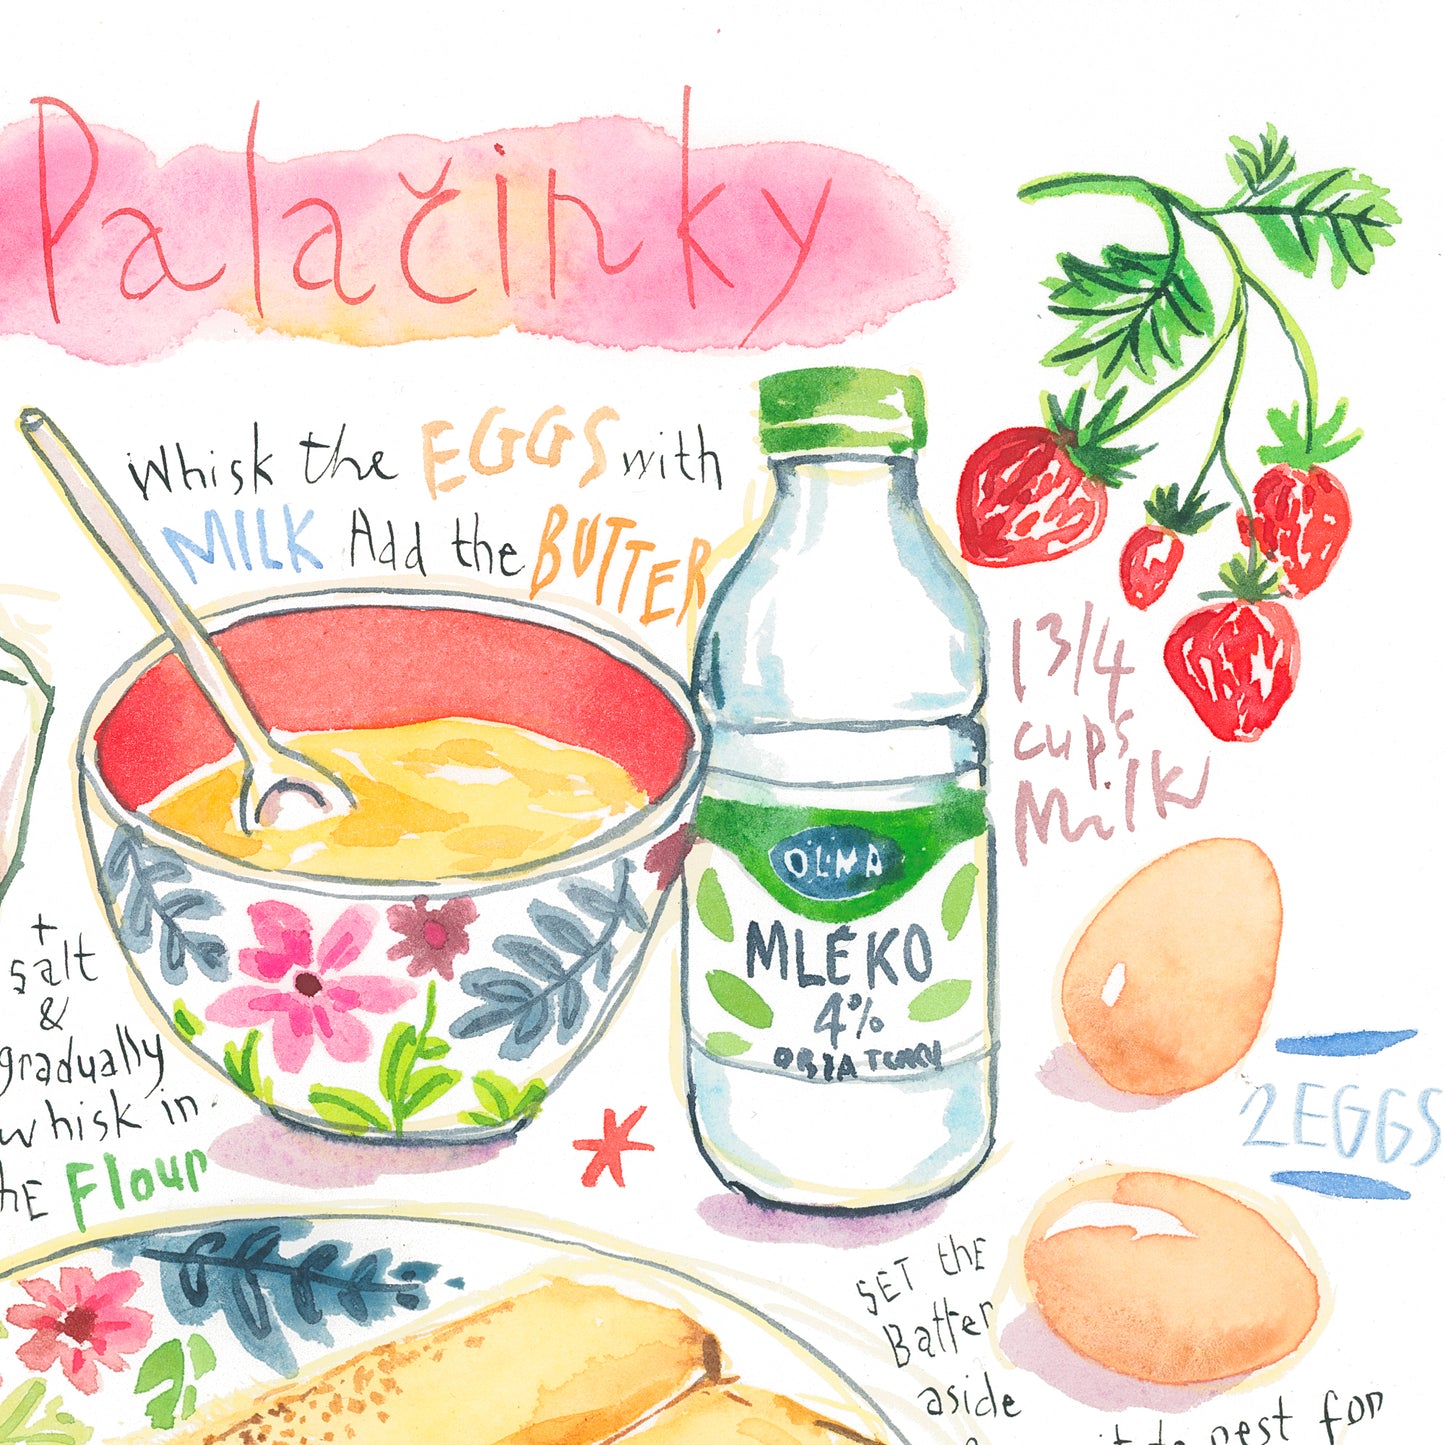 Czech Palacinky recipe. Original watercolor painting